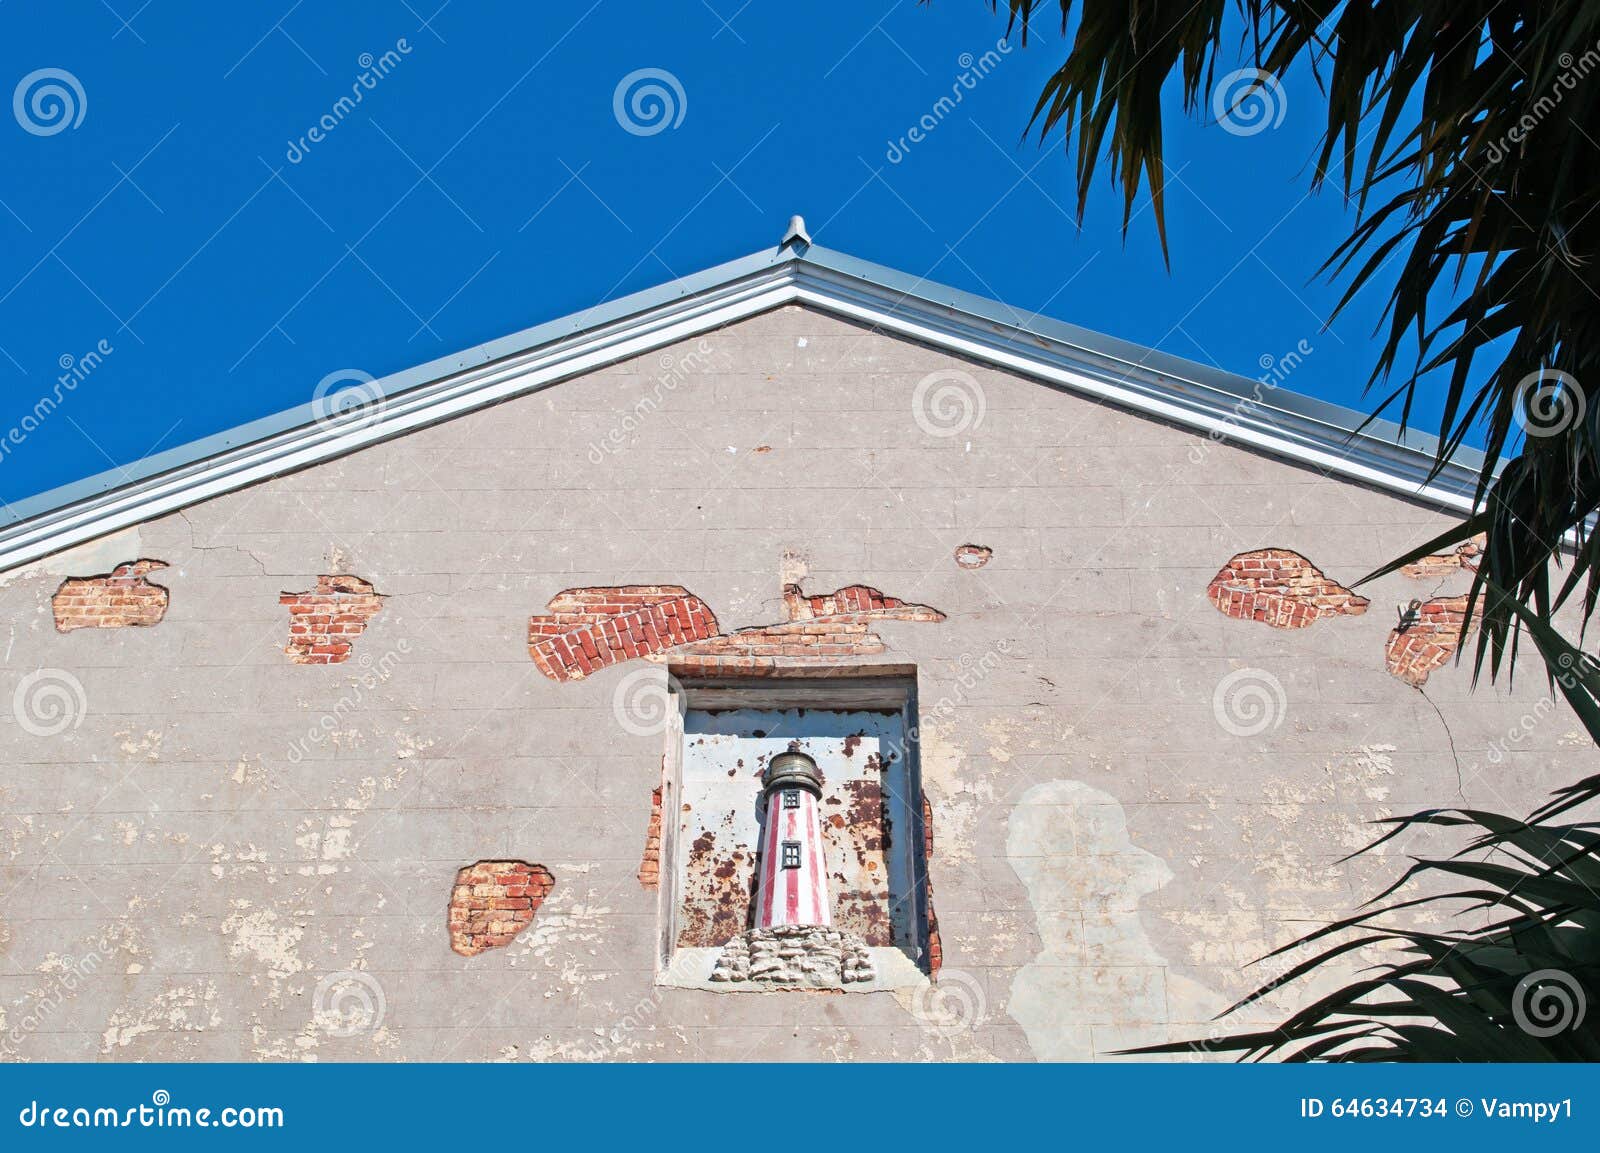 lighthouse, house decoration, home, key west architecture, keys, cayo hueso, monroe county, island, florida